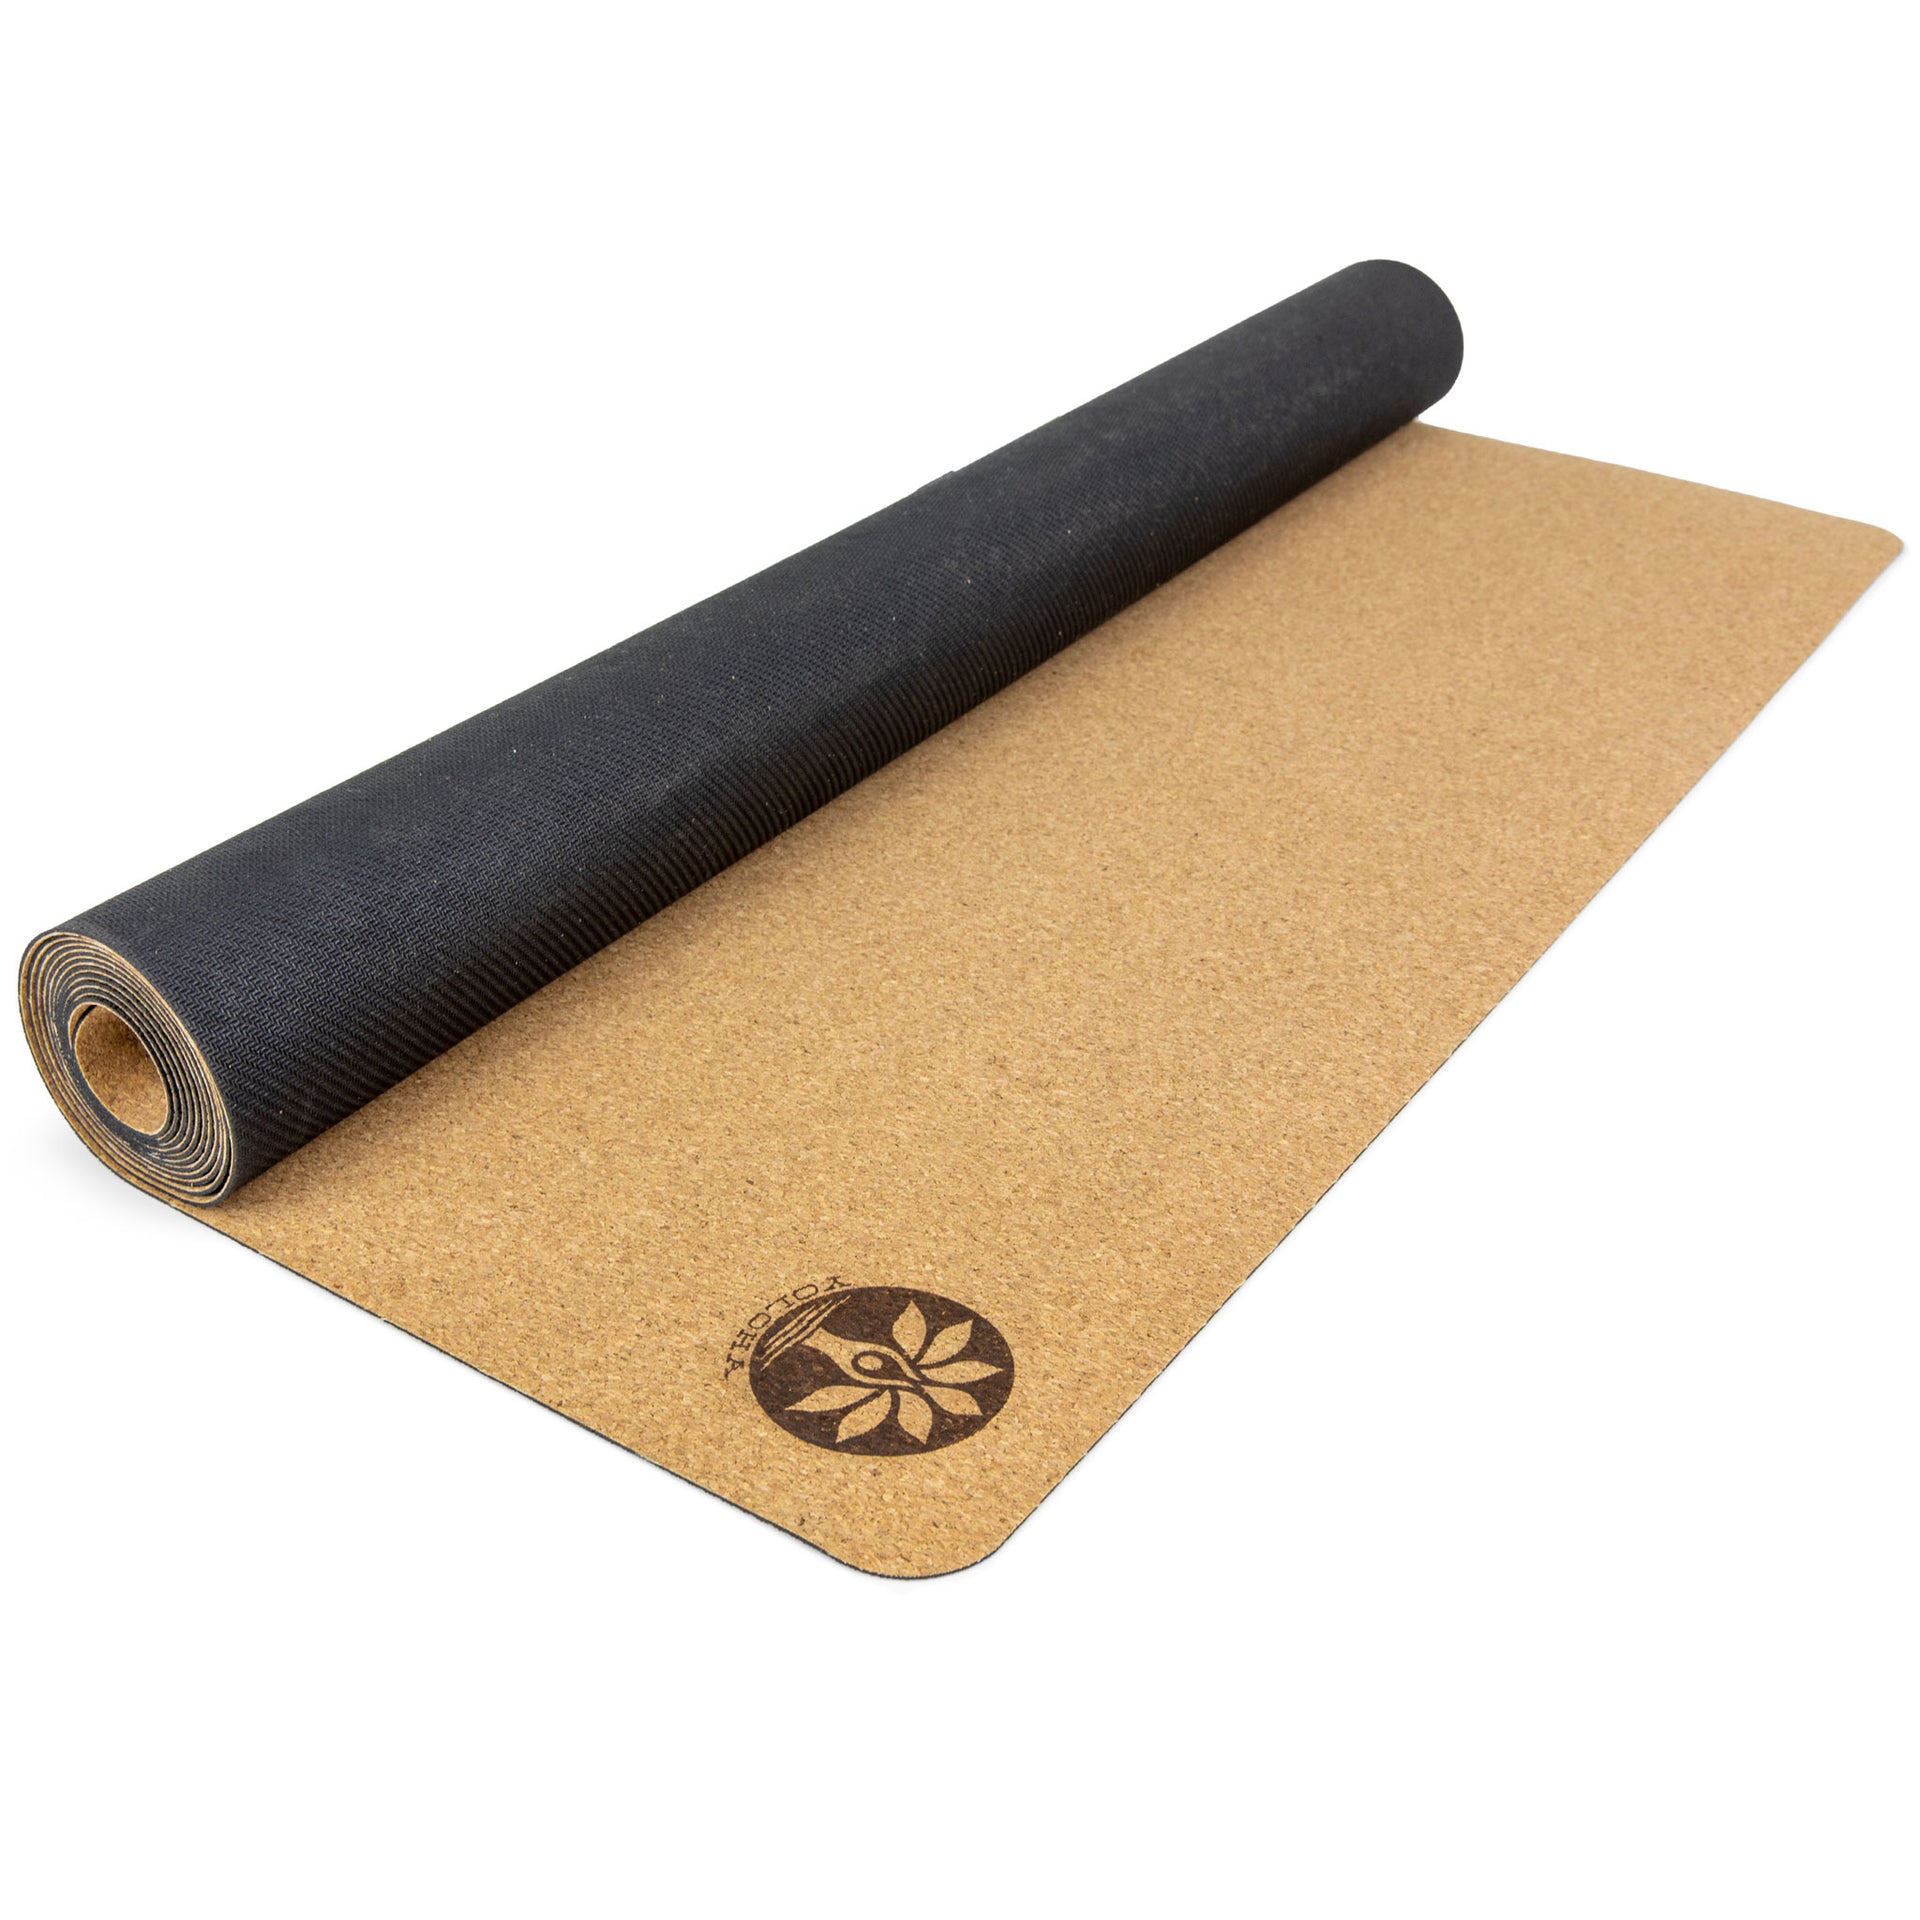 Myga Cork Yoga Mat - Natural Cork Top and TPE Yoga Mat - Antibacterial  Eco-Friendly Exercise Mat - 100% Recyclable Non-Slip Yoga Mat - Added Grip  and Lightweight Fitness Mat, Mats -  Canada